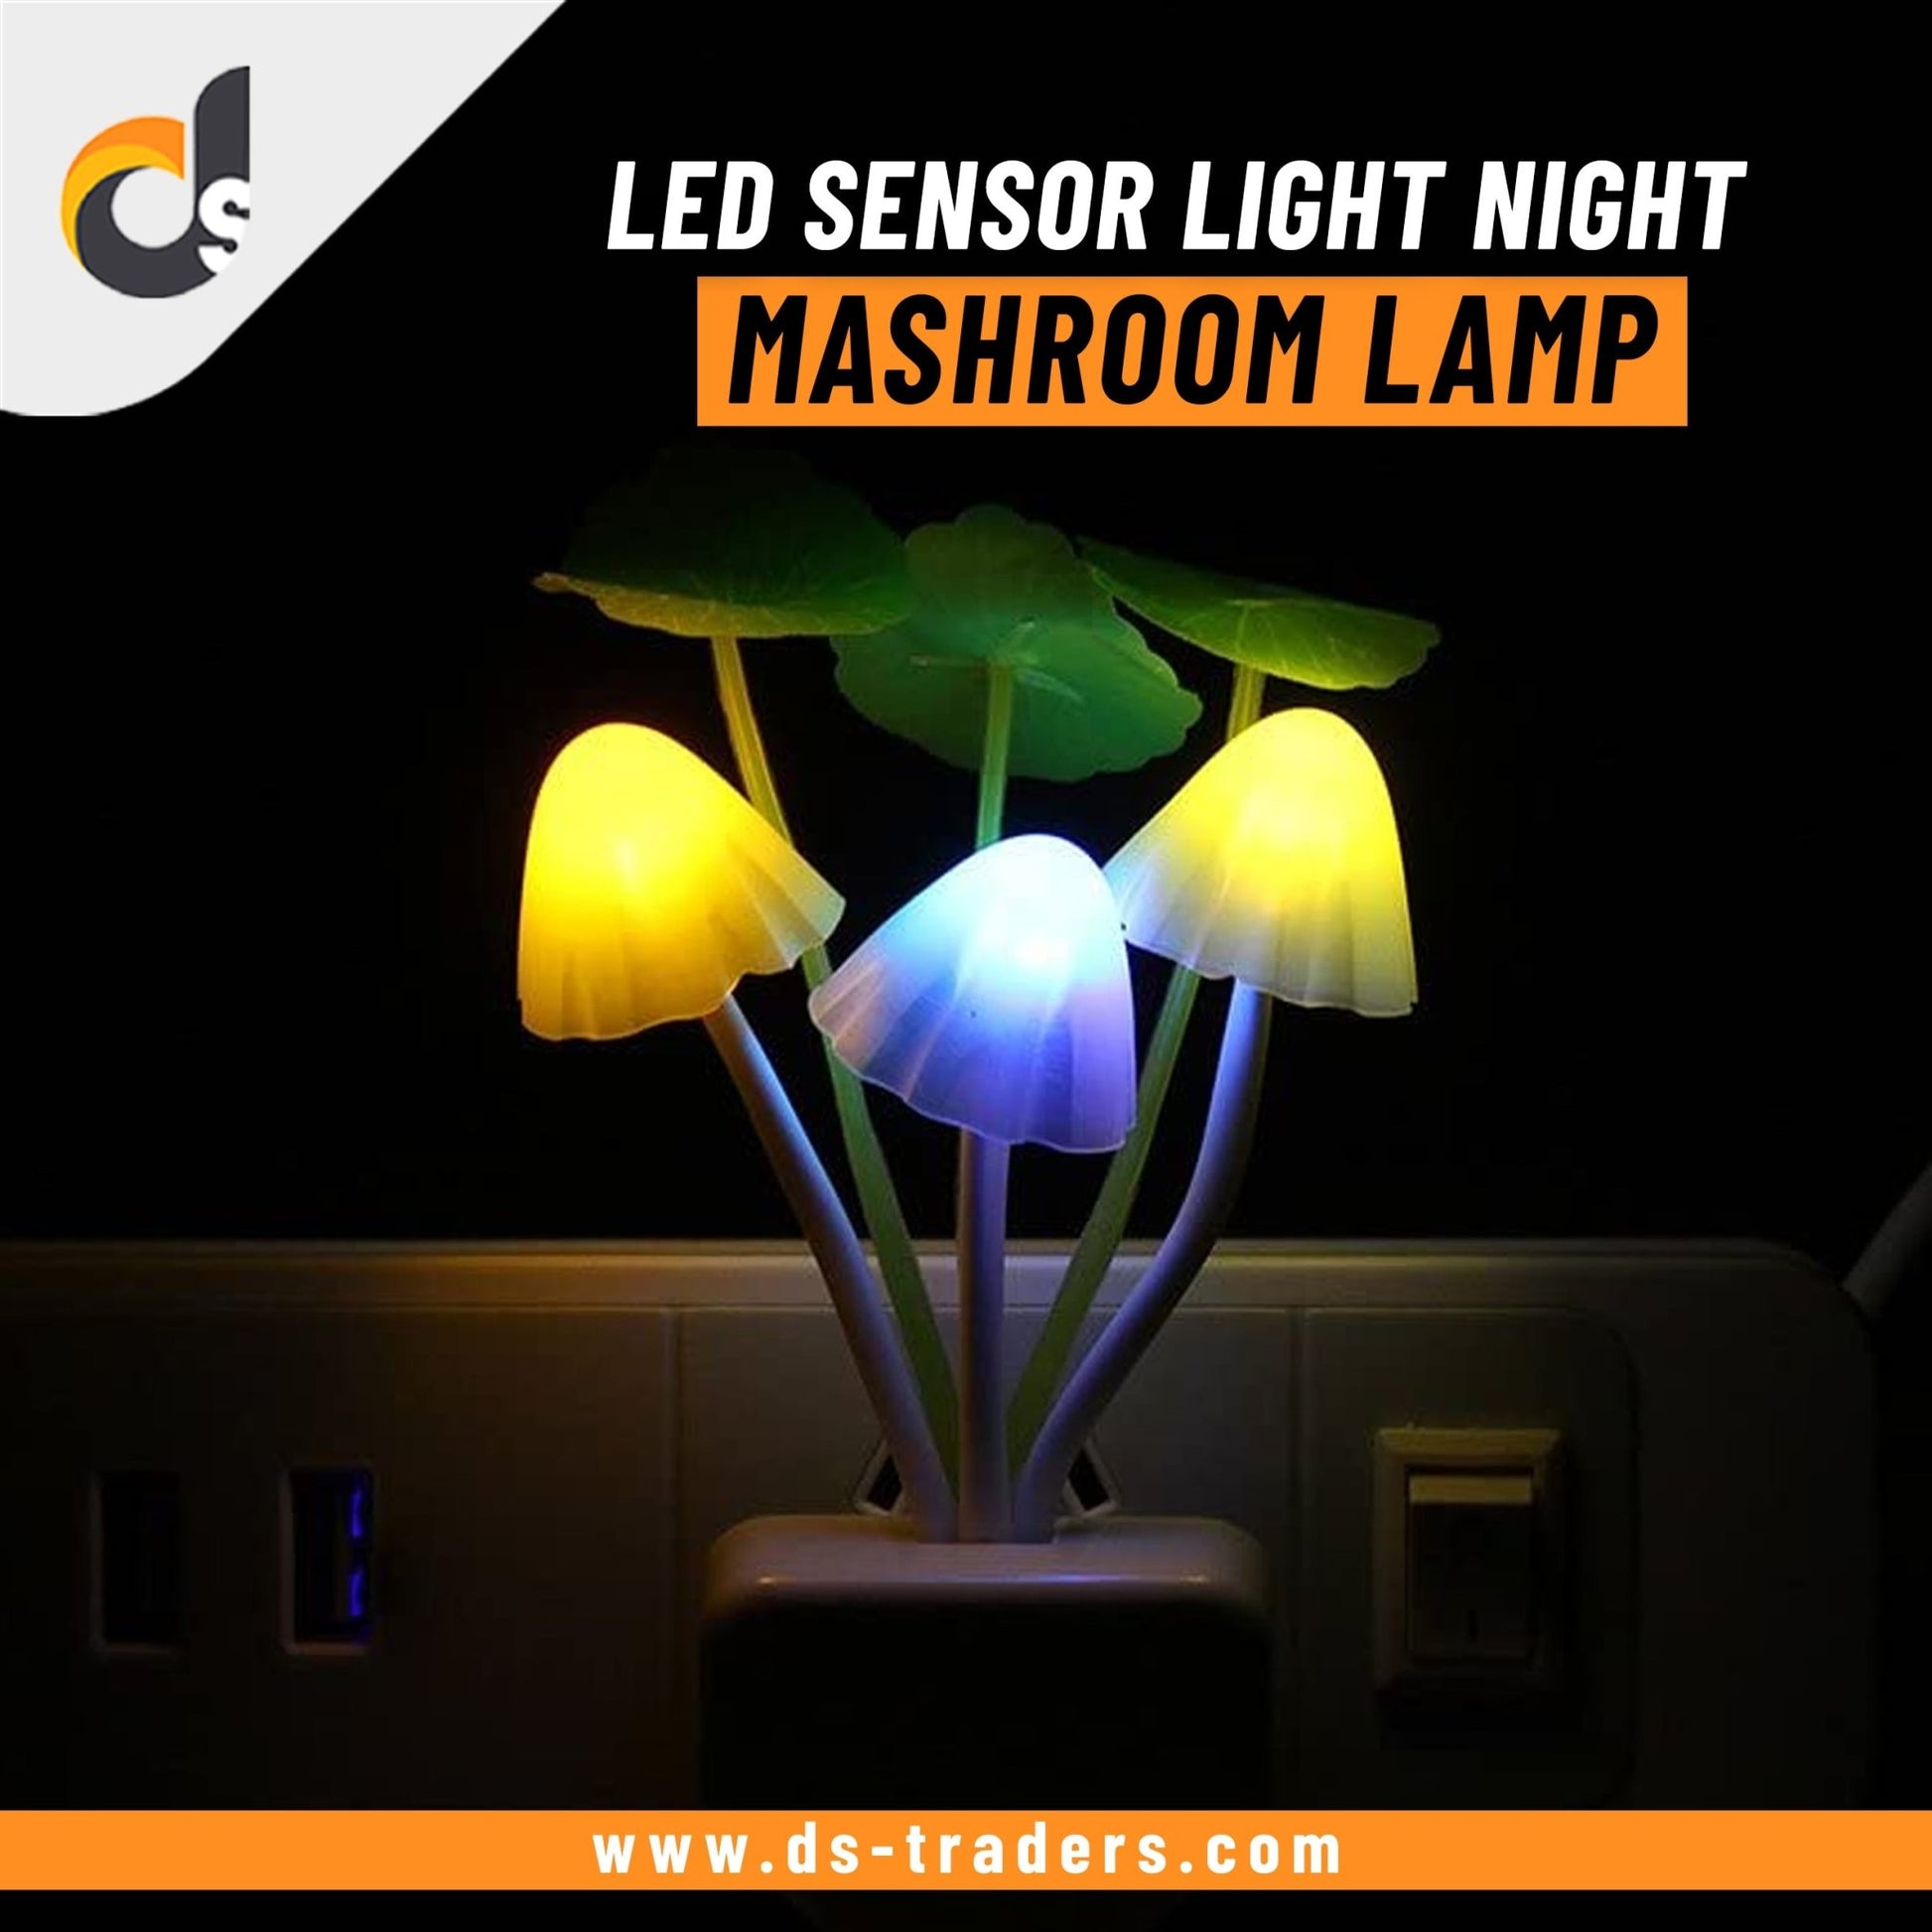 Mushroom LED Sensor Light Night Lamp - DS Traders